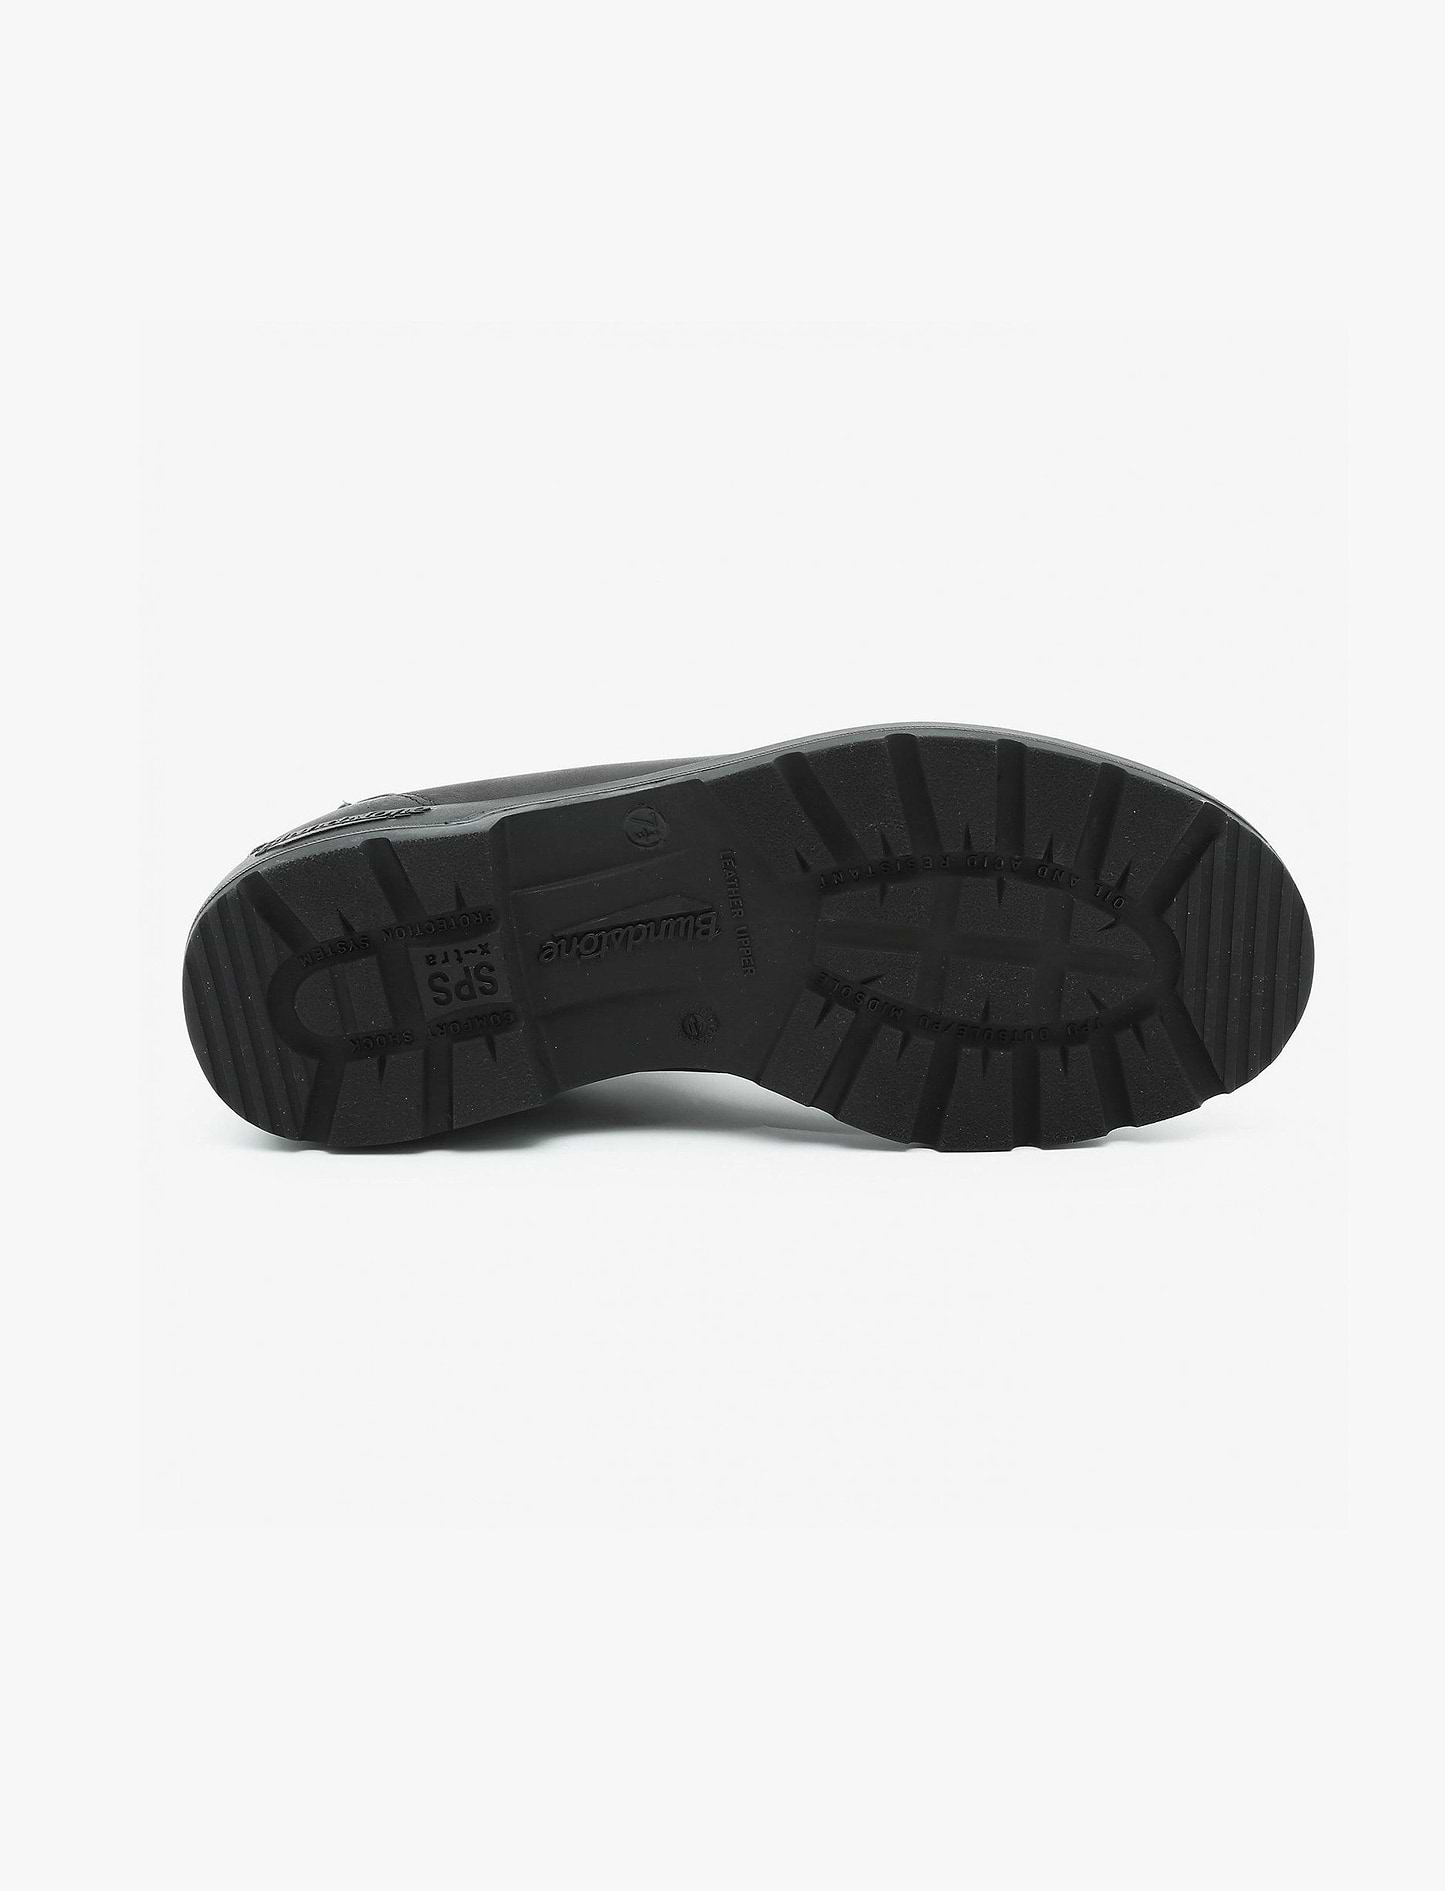 Blundstone M 558 - נעלי בלנסטון בצבע שחור